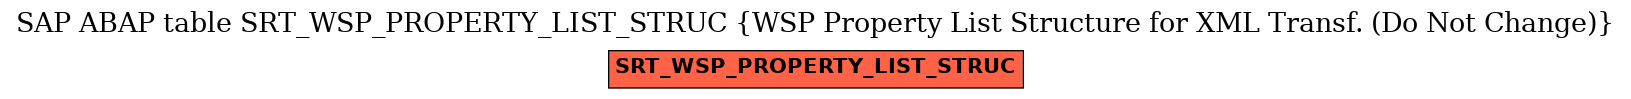 E-R Diagram for table SRT_WSP_PROPERTY_LIST_STRUC (WSP Property List Structure for XML Transf. (Do Not Change))